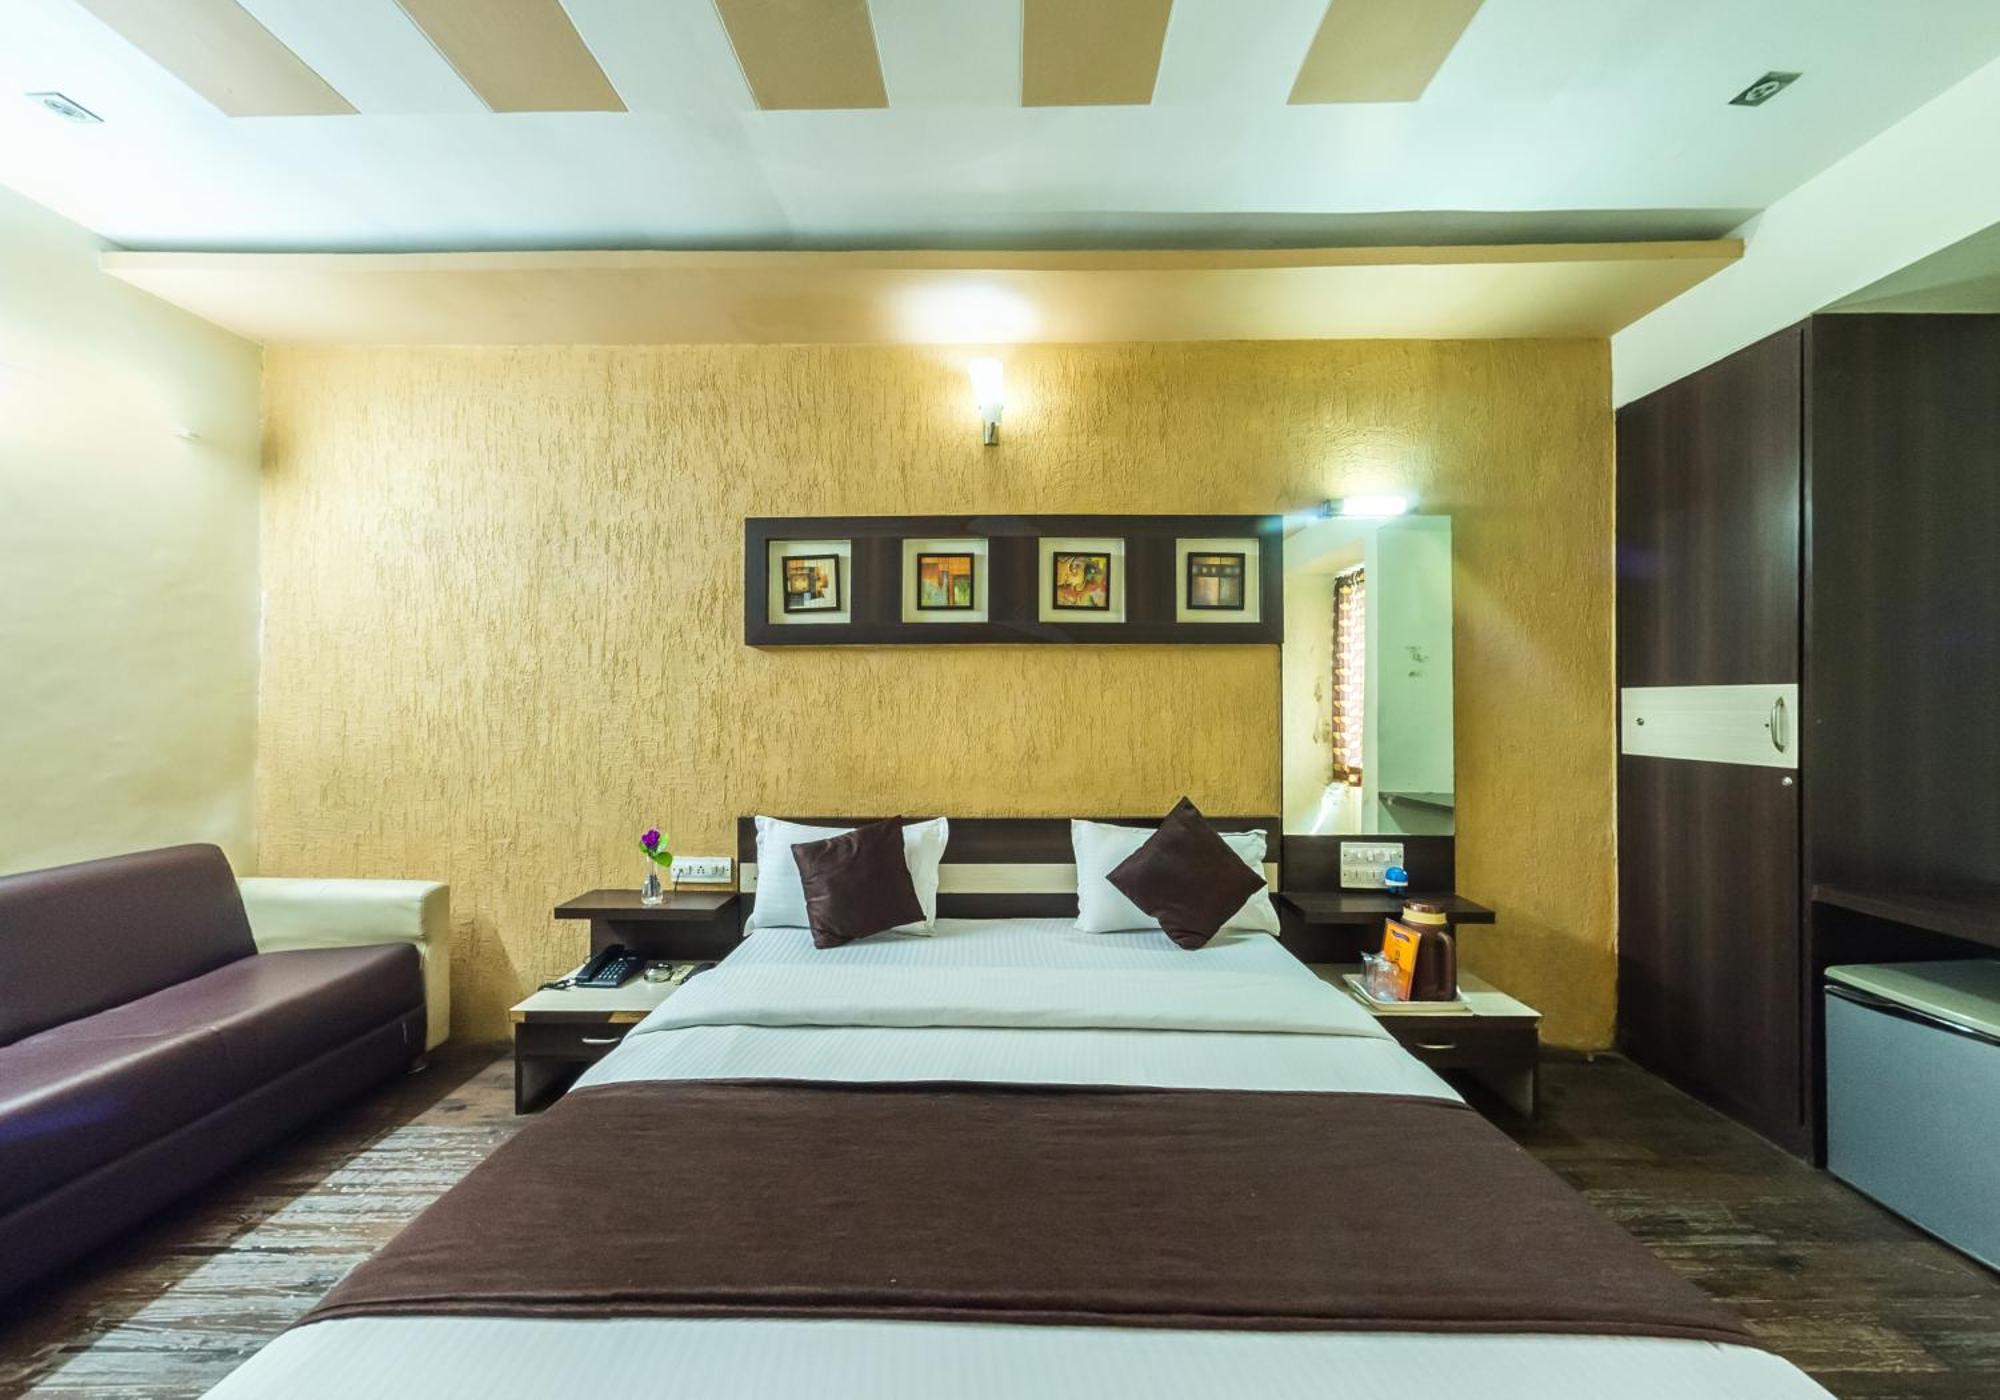 Hotel Rudra Regency 阿穆达巴 外观 照片